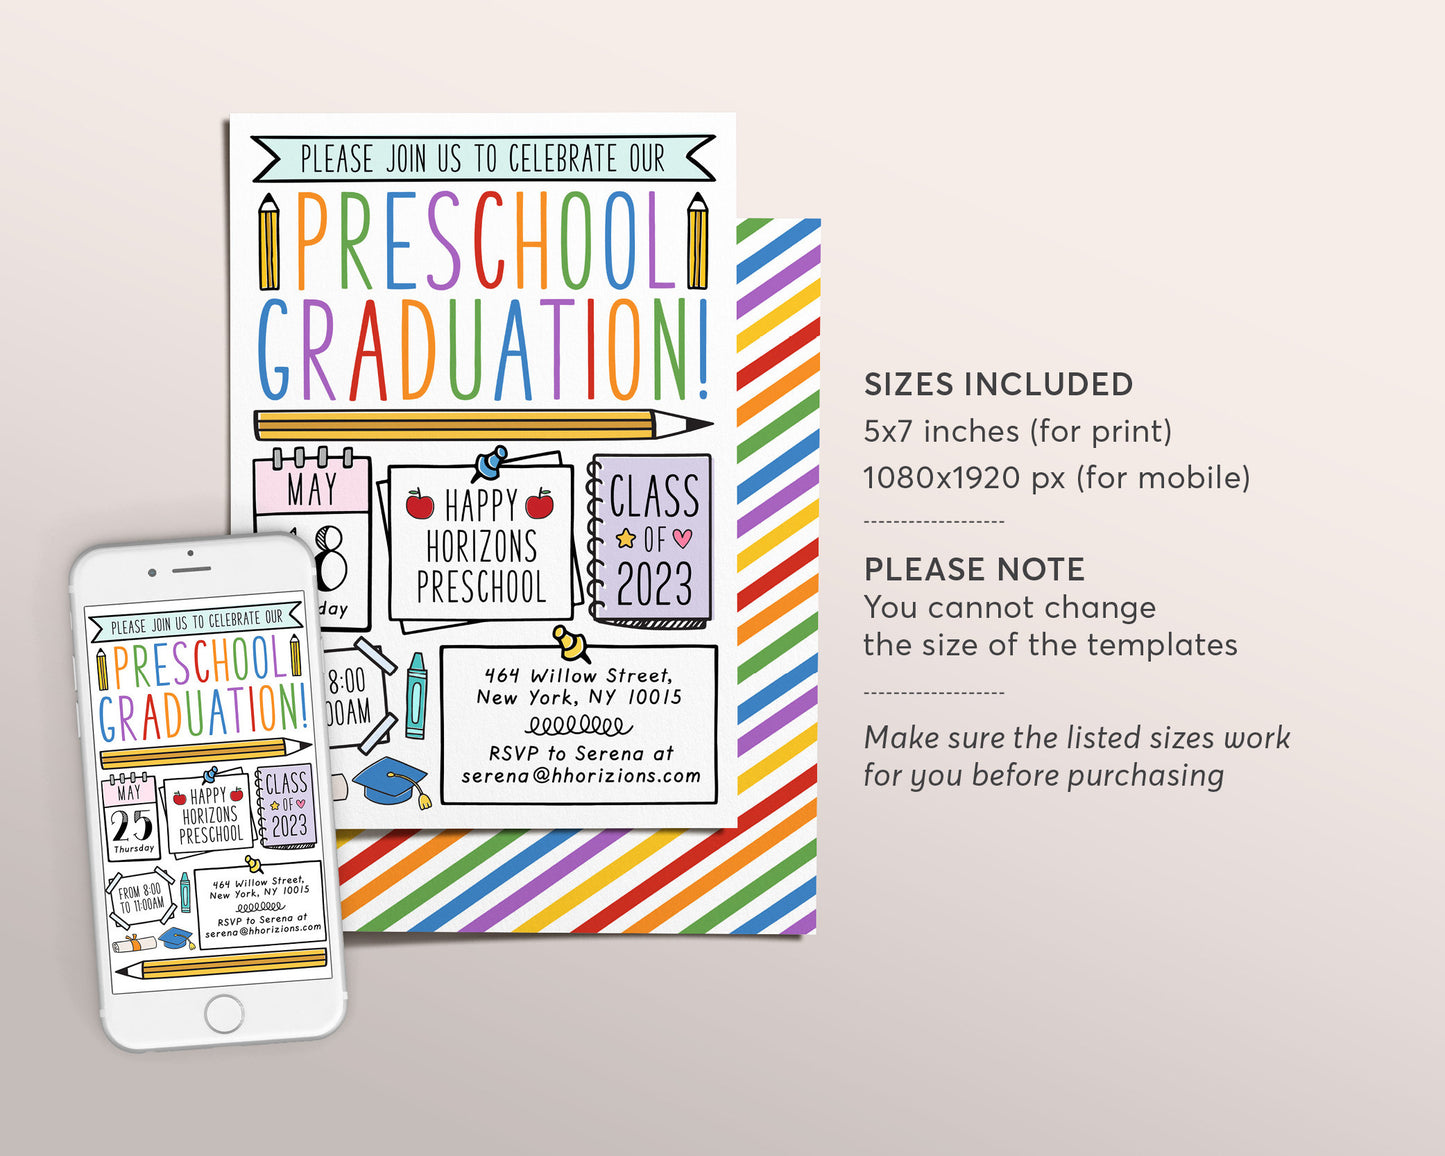 Preschool Graduation Invitation Editable Template, Pre-K Kindergarten Class Graduation Announcement, Graduation Ceremony Invite Evite